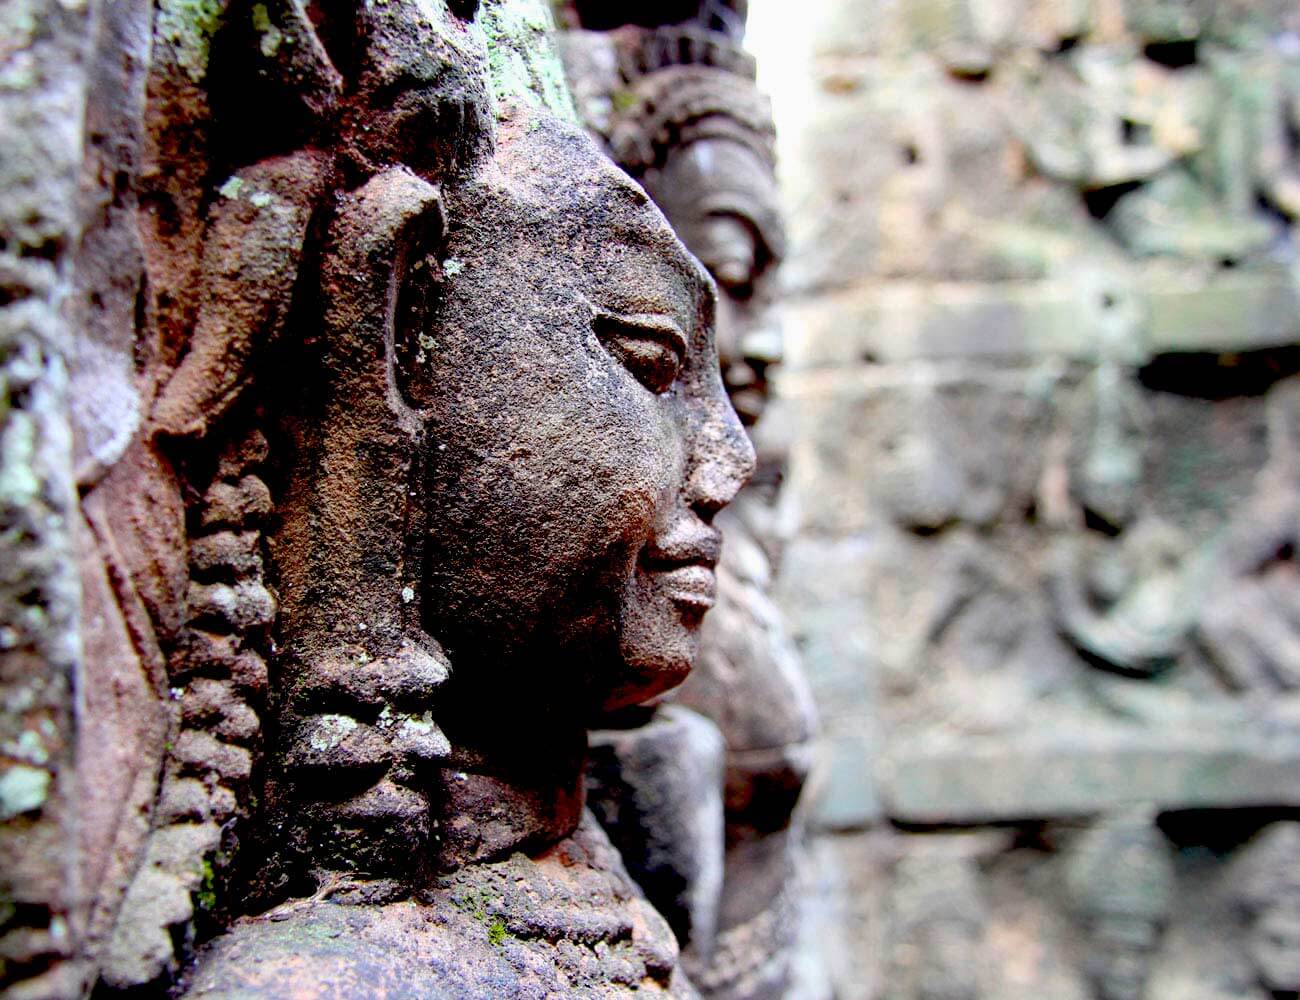 Teracce Leper King Angkor Cambodia